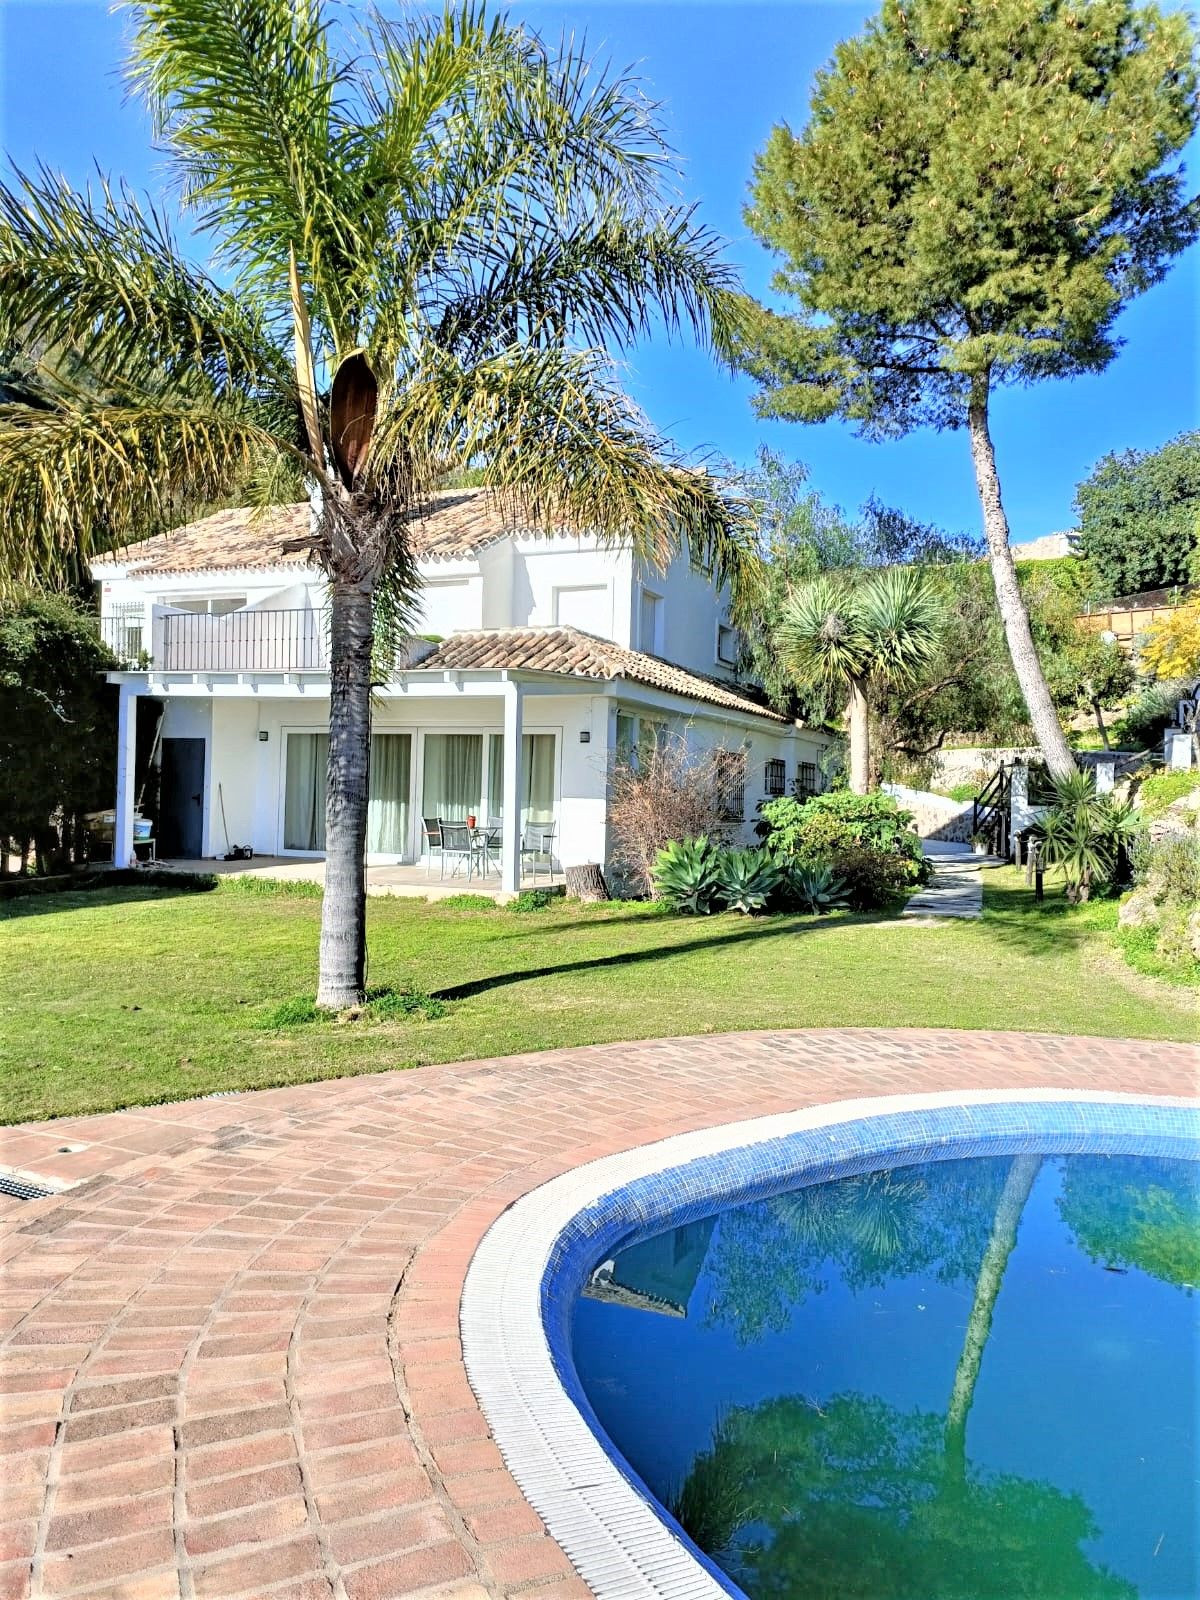 						Villa  Semi Detached
													for sale 
																			 in Ojén
					